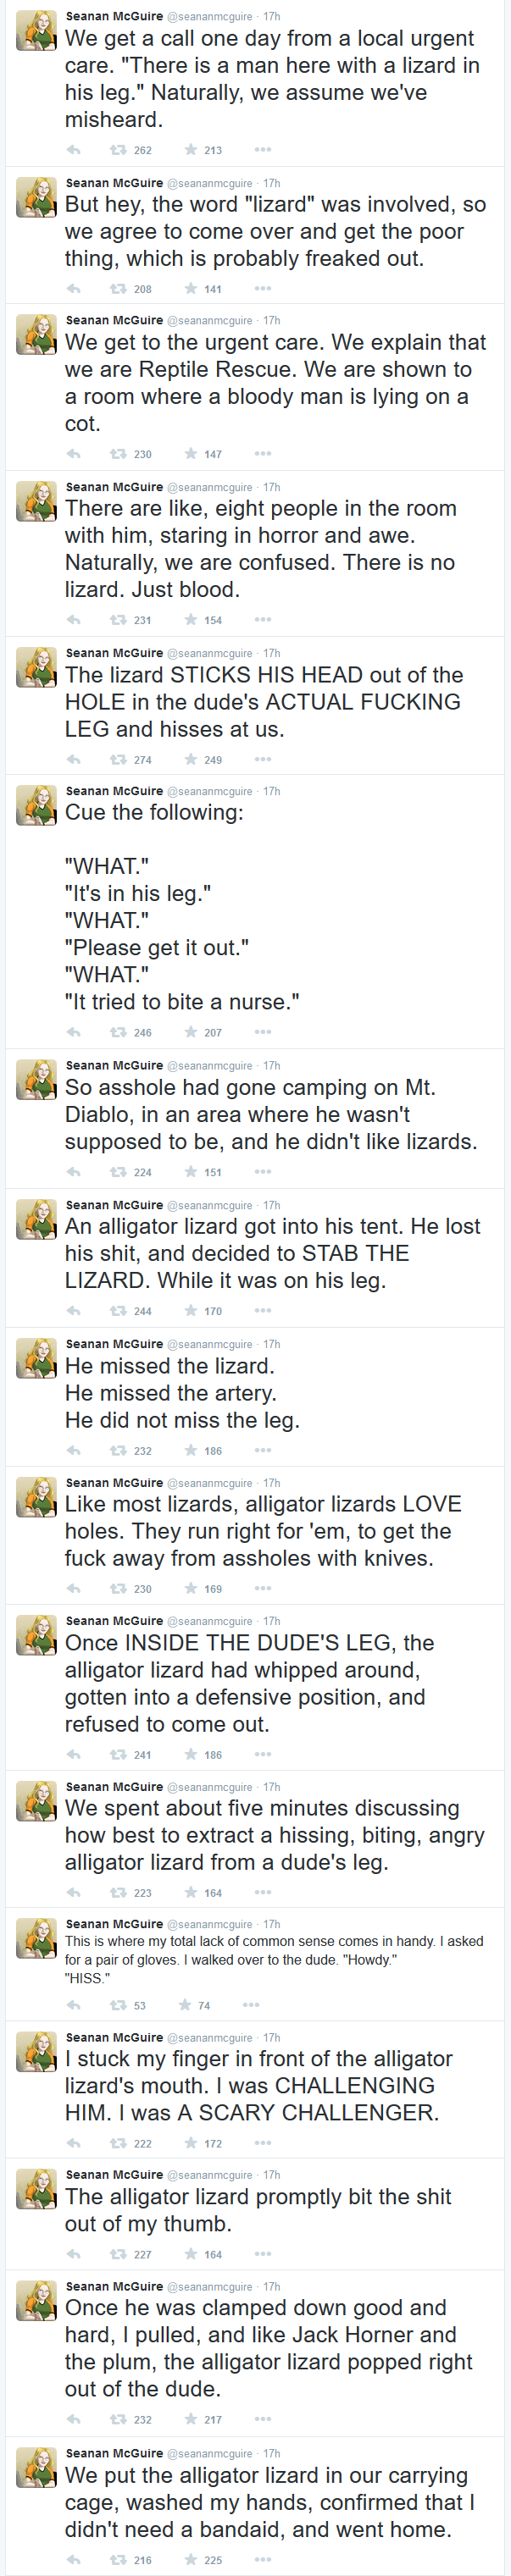 Lizard Story